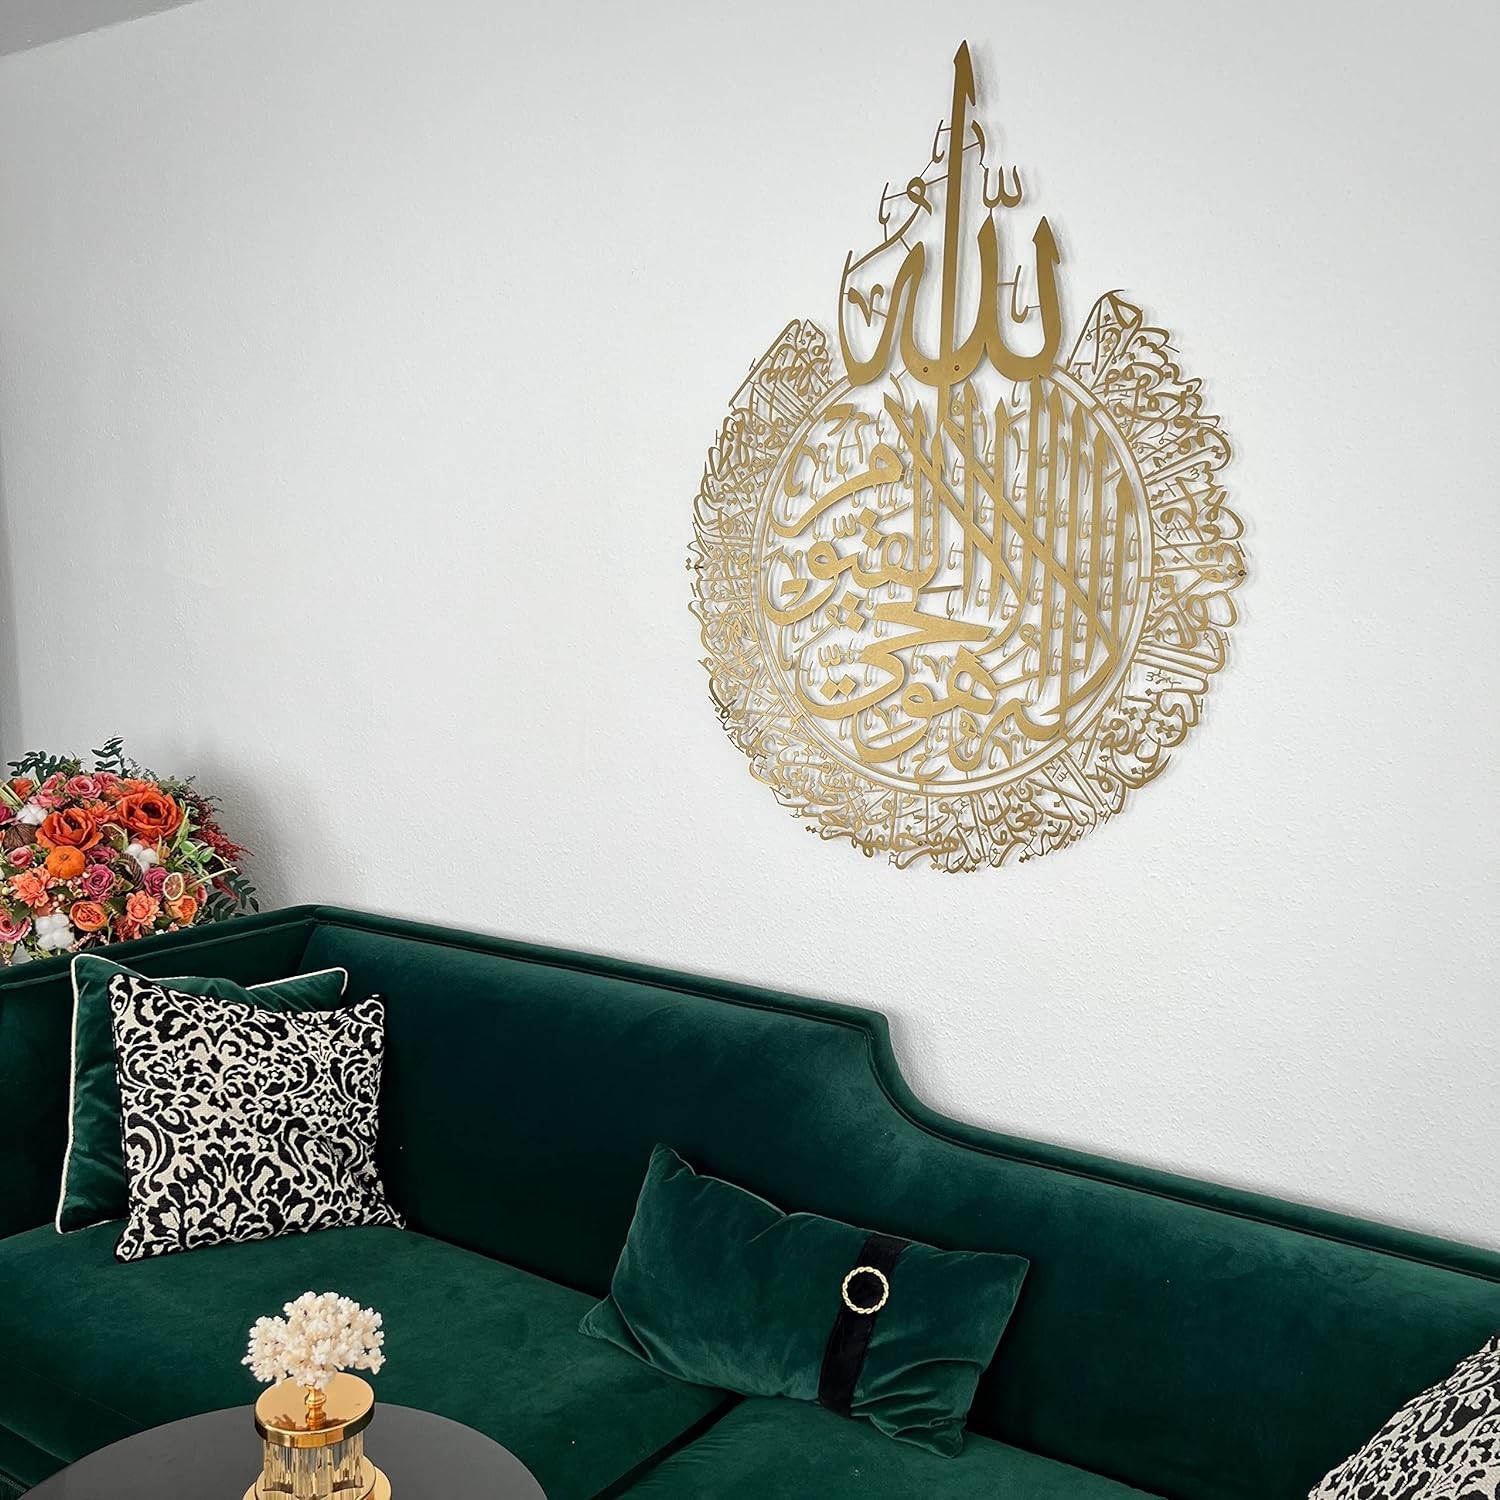 Blindshop %100 Metal Islamic Wall Art, Islamic Wall Decor, Gift for Muslims, Ramadan Gift, Islamıc Wall Decor (Gold, 25.5"x19.7")